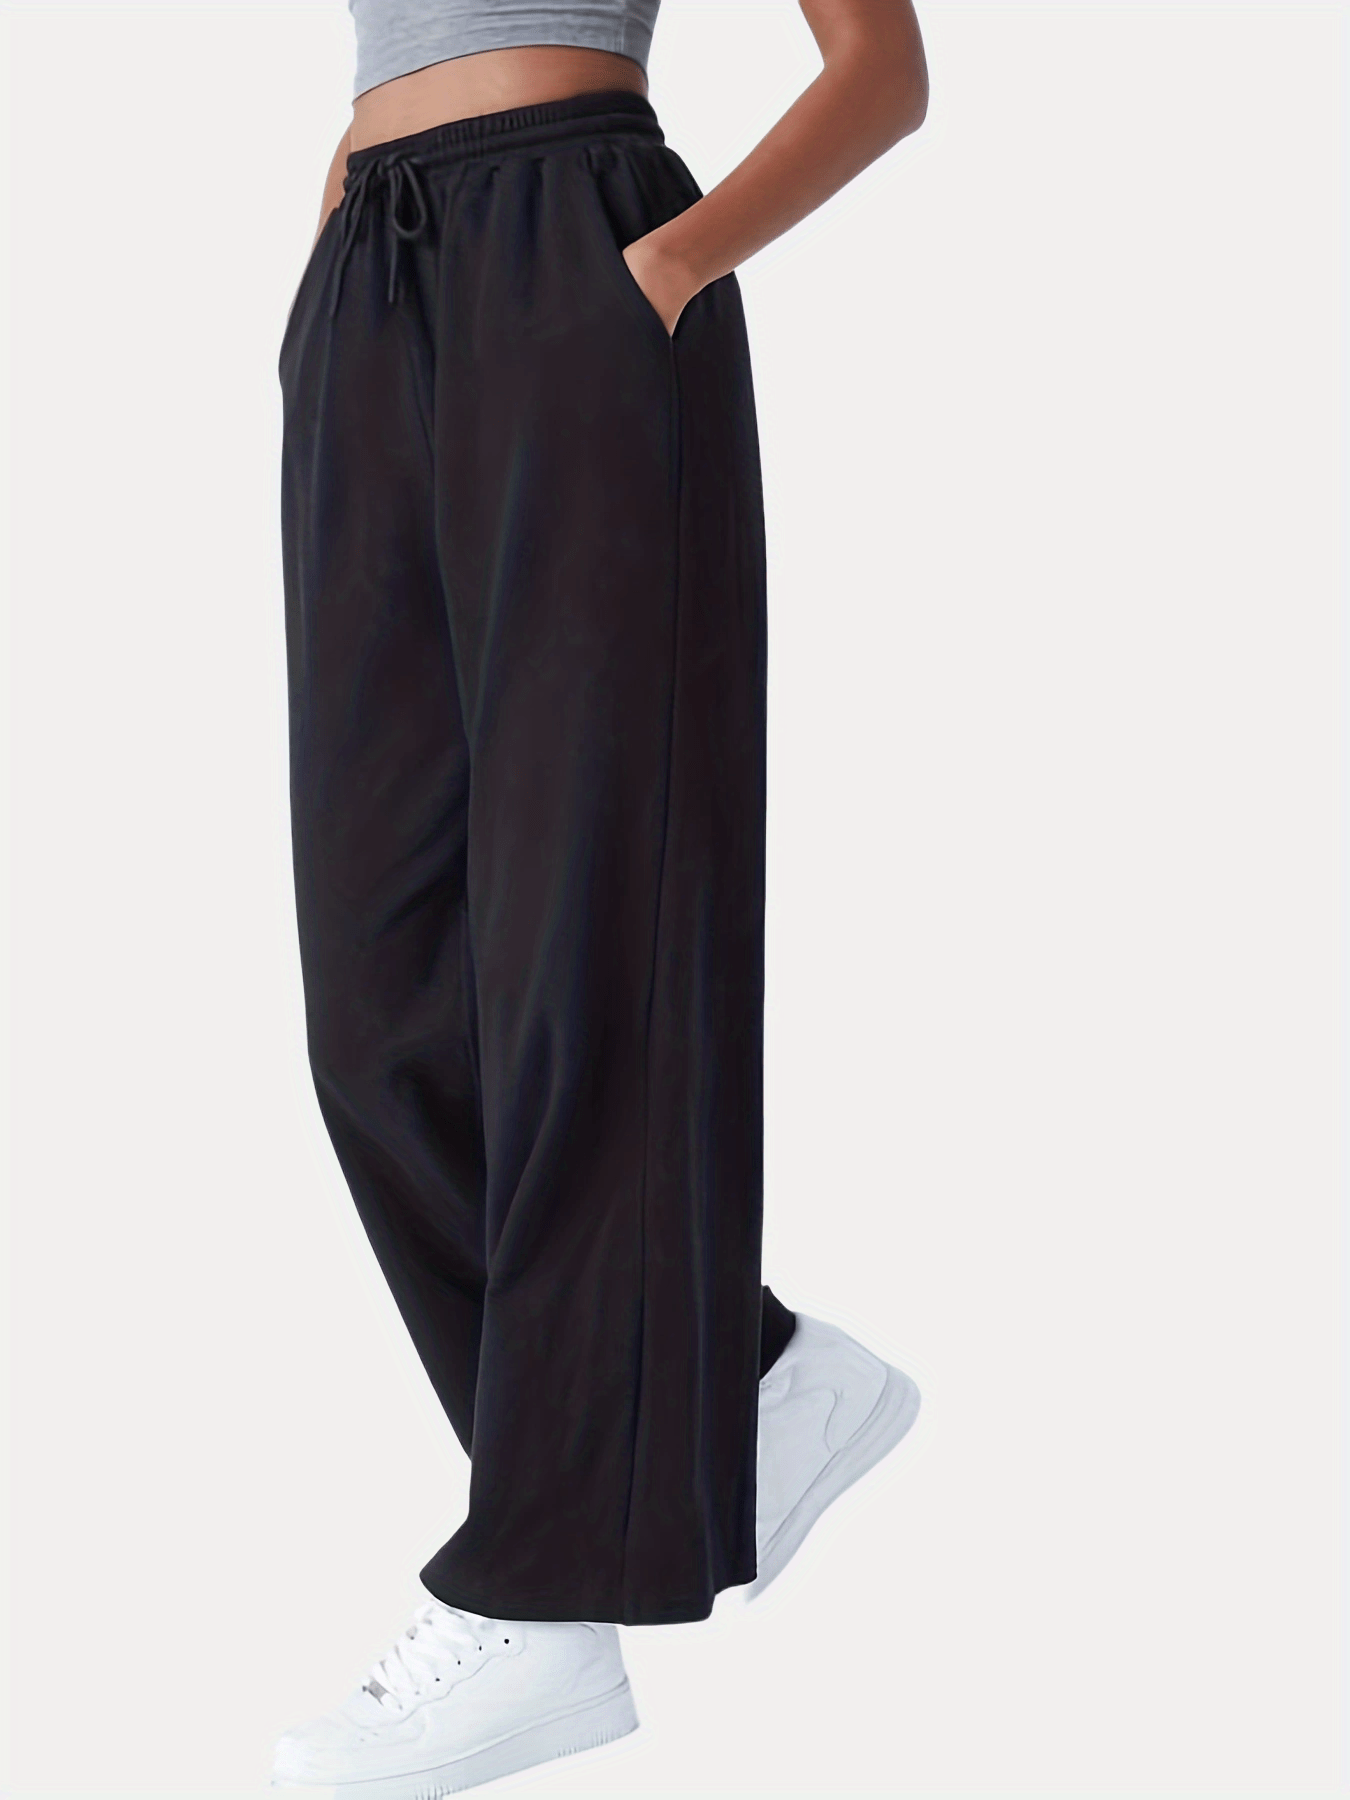 MOMEITU Streetwear Black Pants Women Elastic Waist Sweatpants